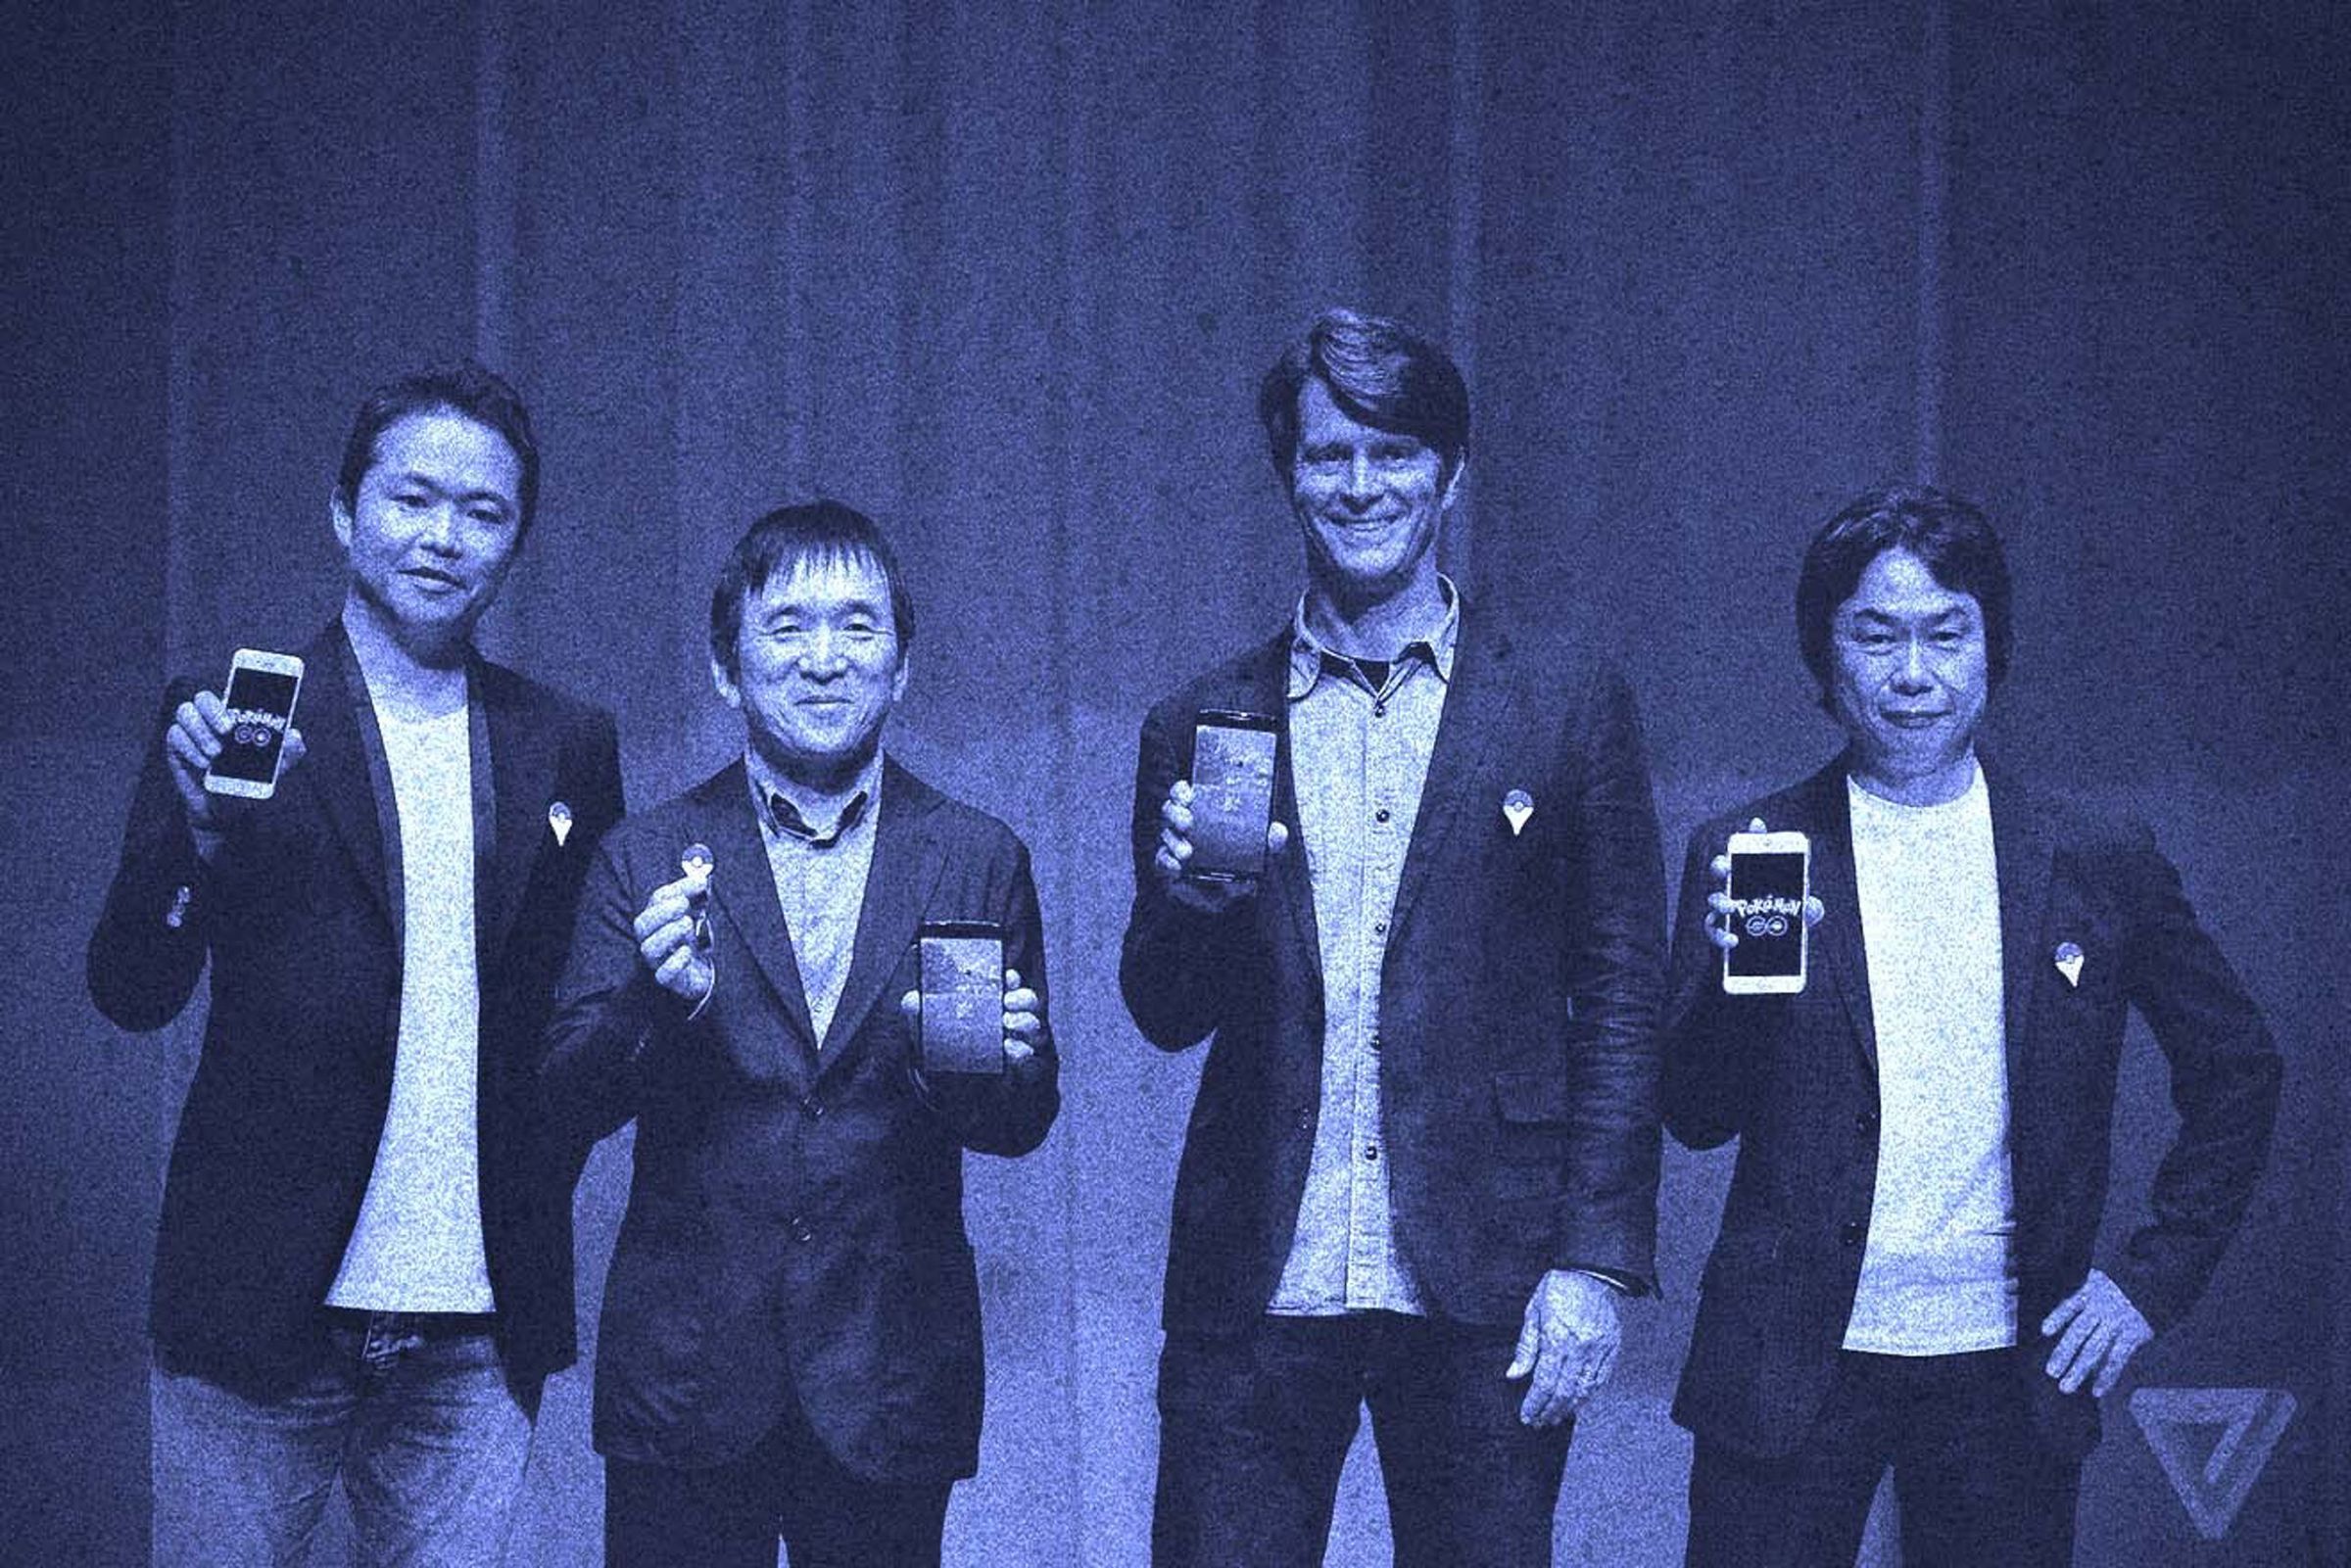 Pokemon Go’s announcement in 2015. From left to right: Game Freak’s Junichi Masuda, The Pokémon Company’s Tsunekazu Ishihara, Niantic’s John Hanke, and Nintendo’s Shigeru Miyamoto.  